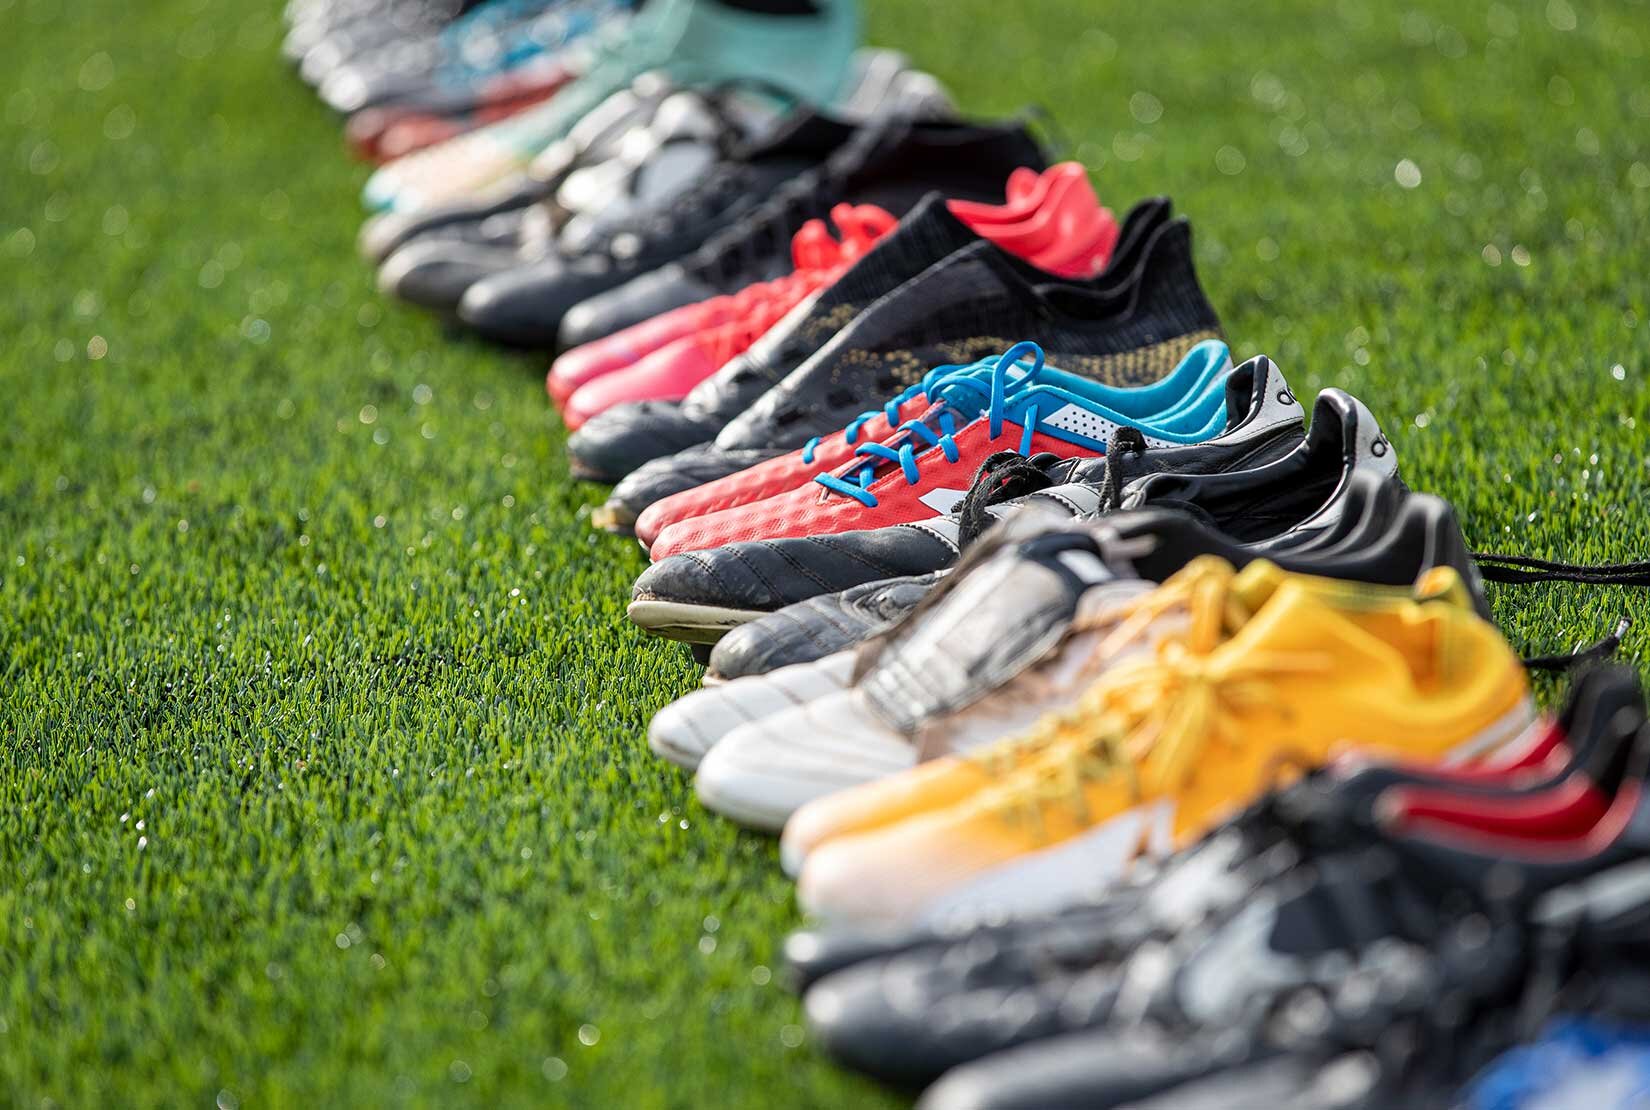 football boots on grass